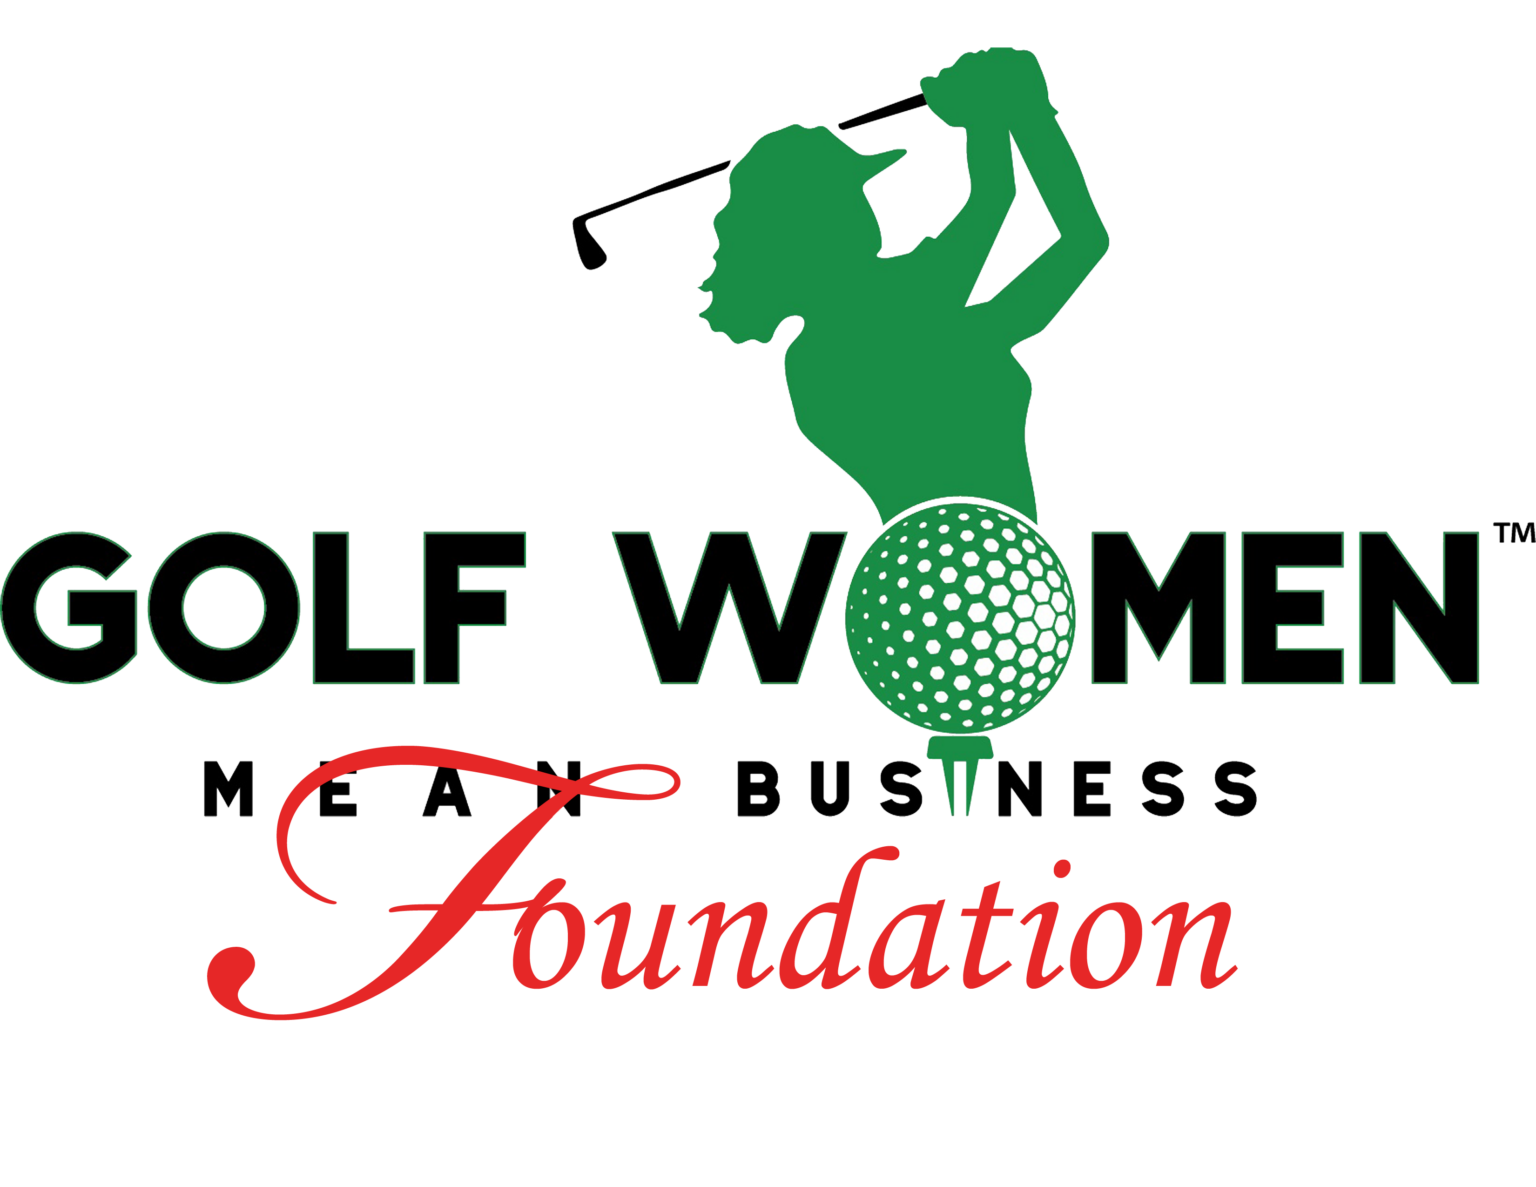 Foundation - Golf Women Mean Business